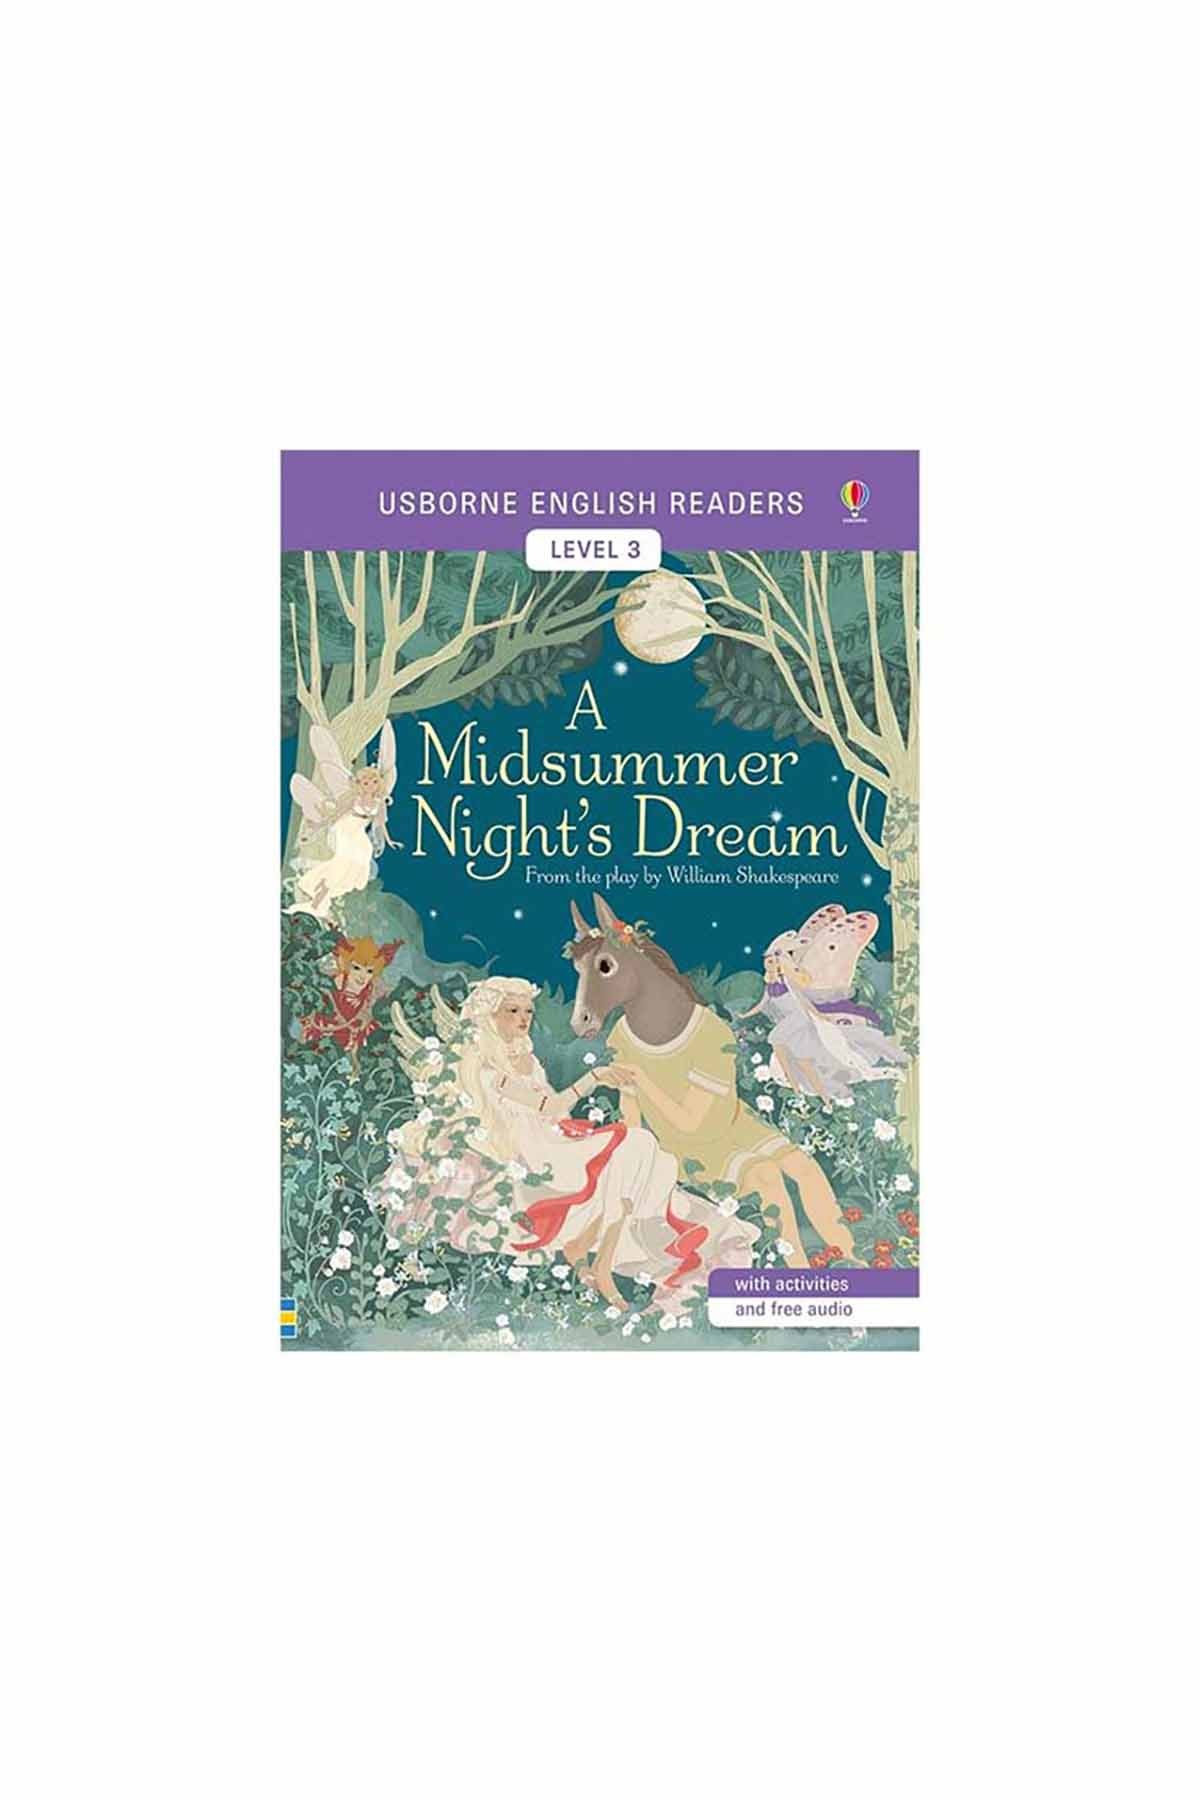 The Usborne A Midsummer Night's Dream